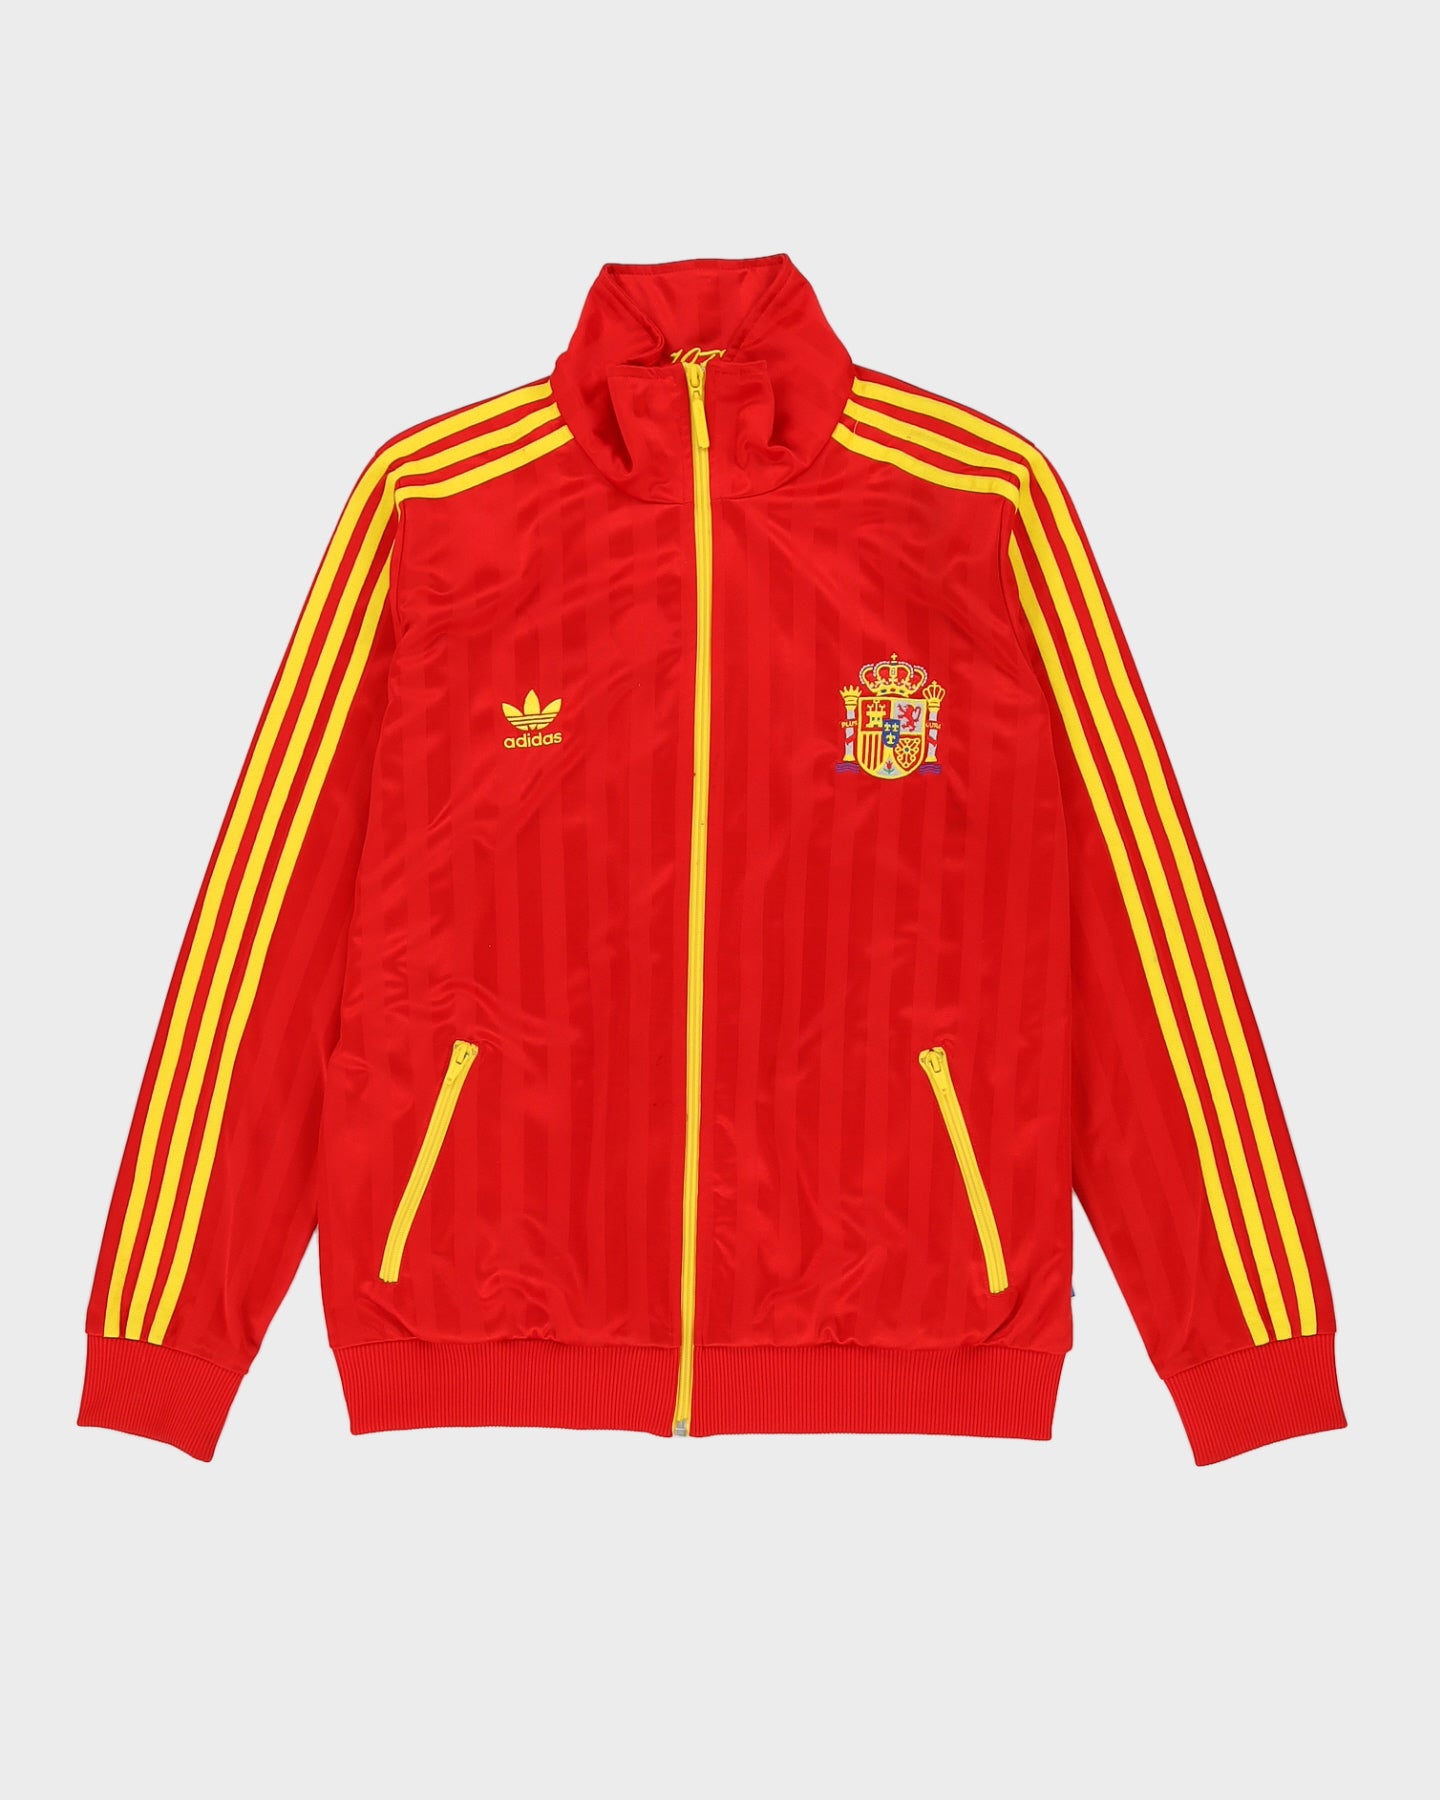 Spain International Football Team Repro 70s Track Jacket - M